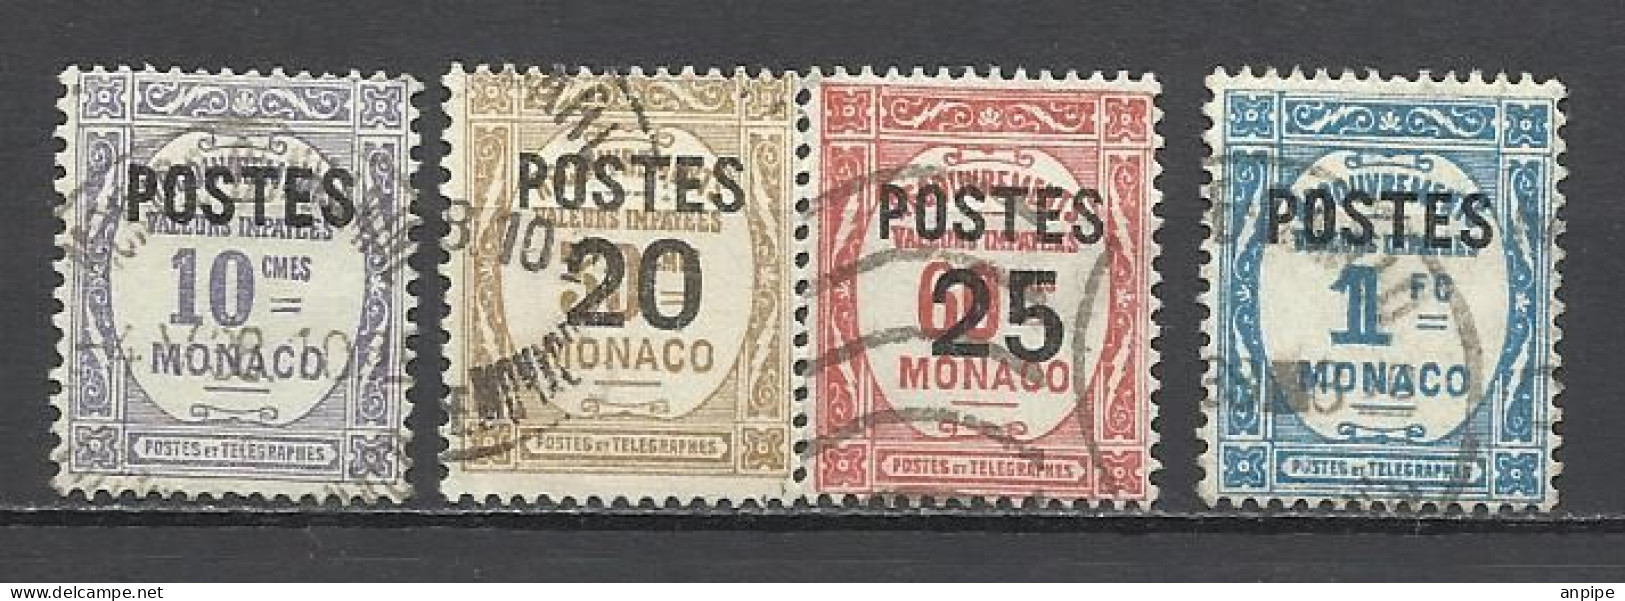 MÓNACO, 1937 - Used Stamps